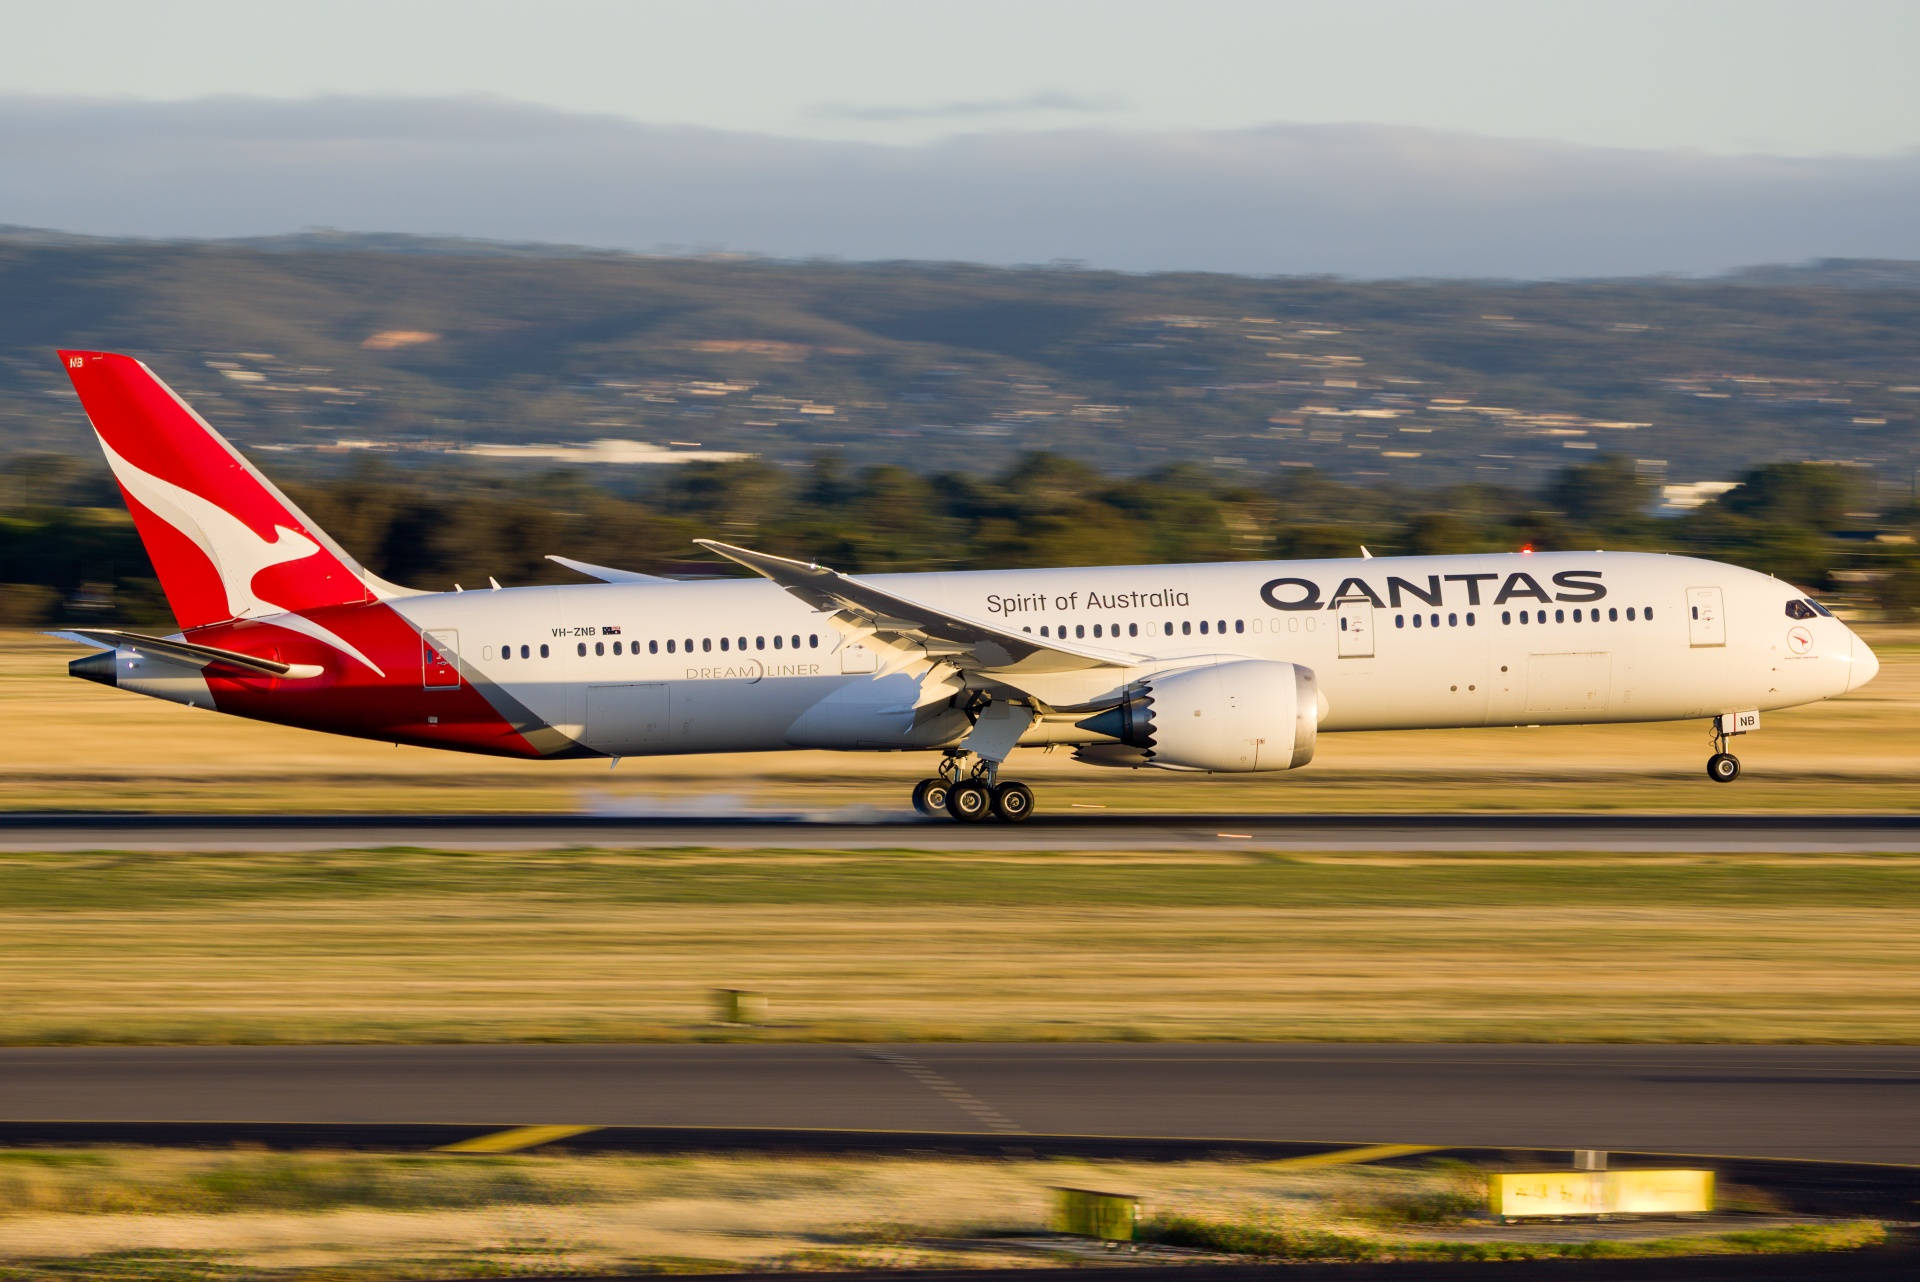 Qantas Airplane Speeding On The Runway Wallpaper